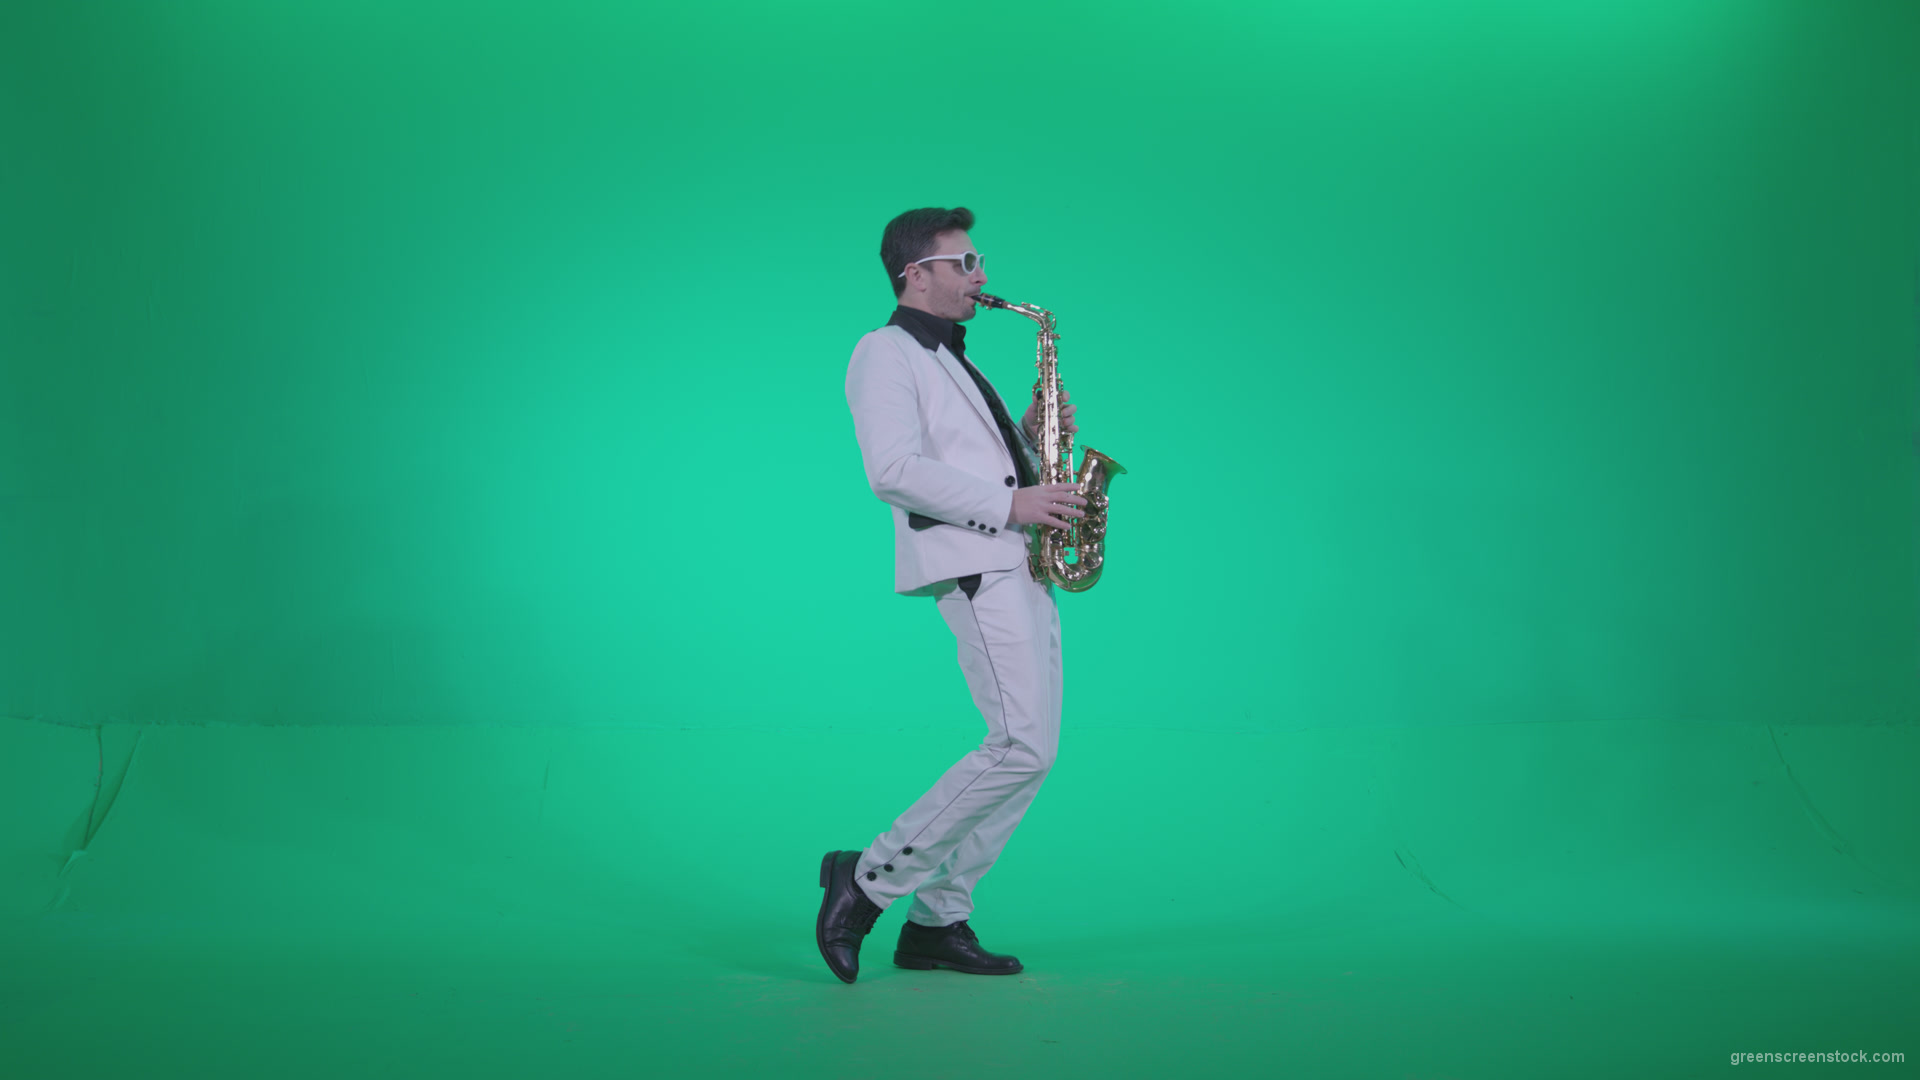 Saxophone-Virtuoso-Performer-s2_007 Green Screen Stock